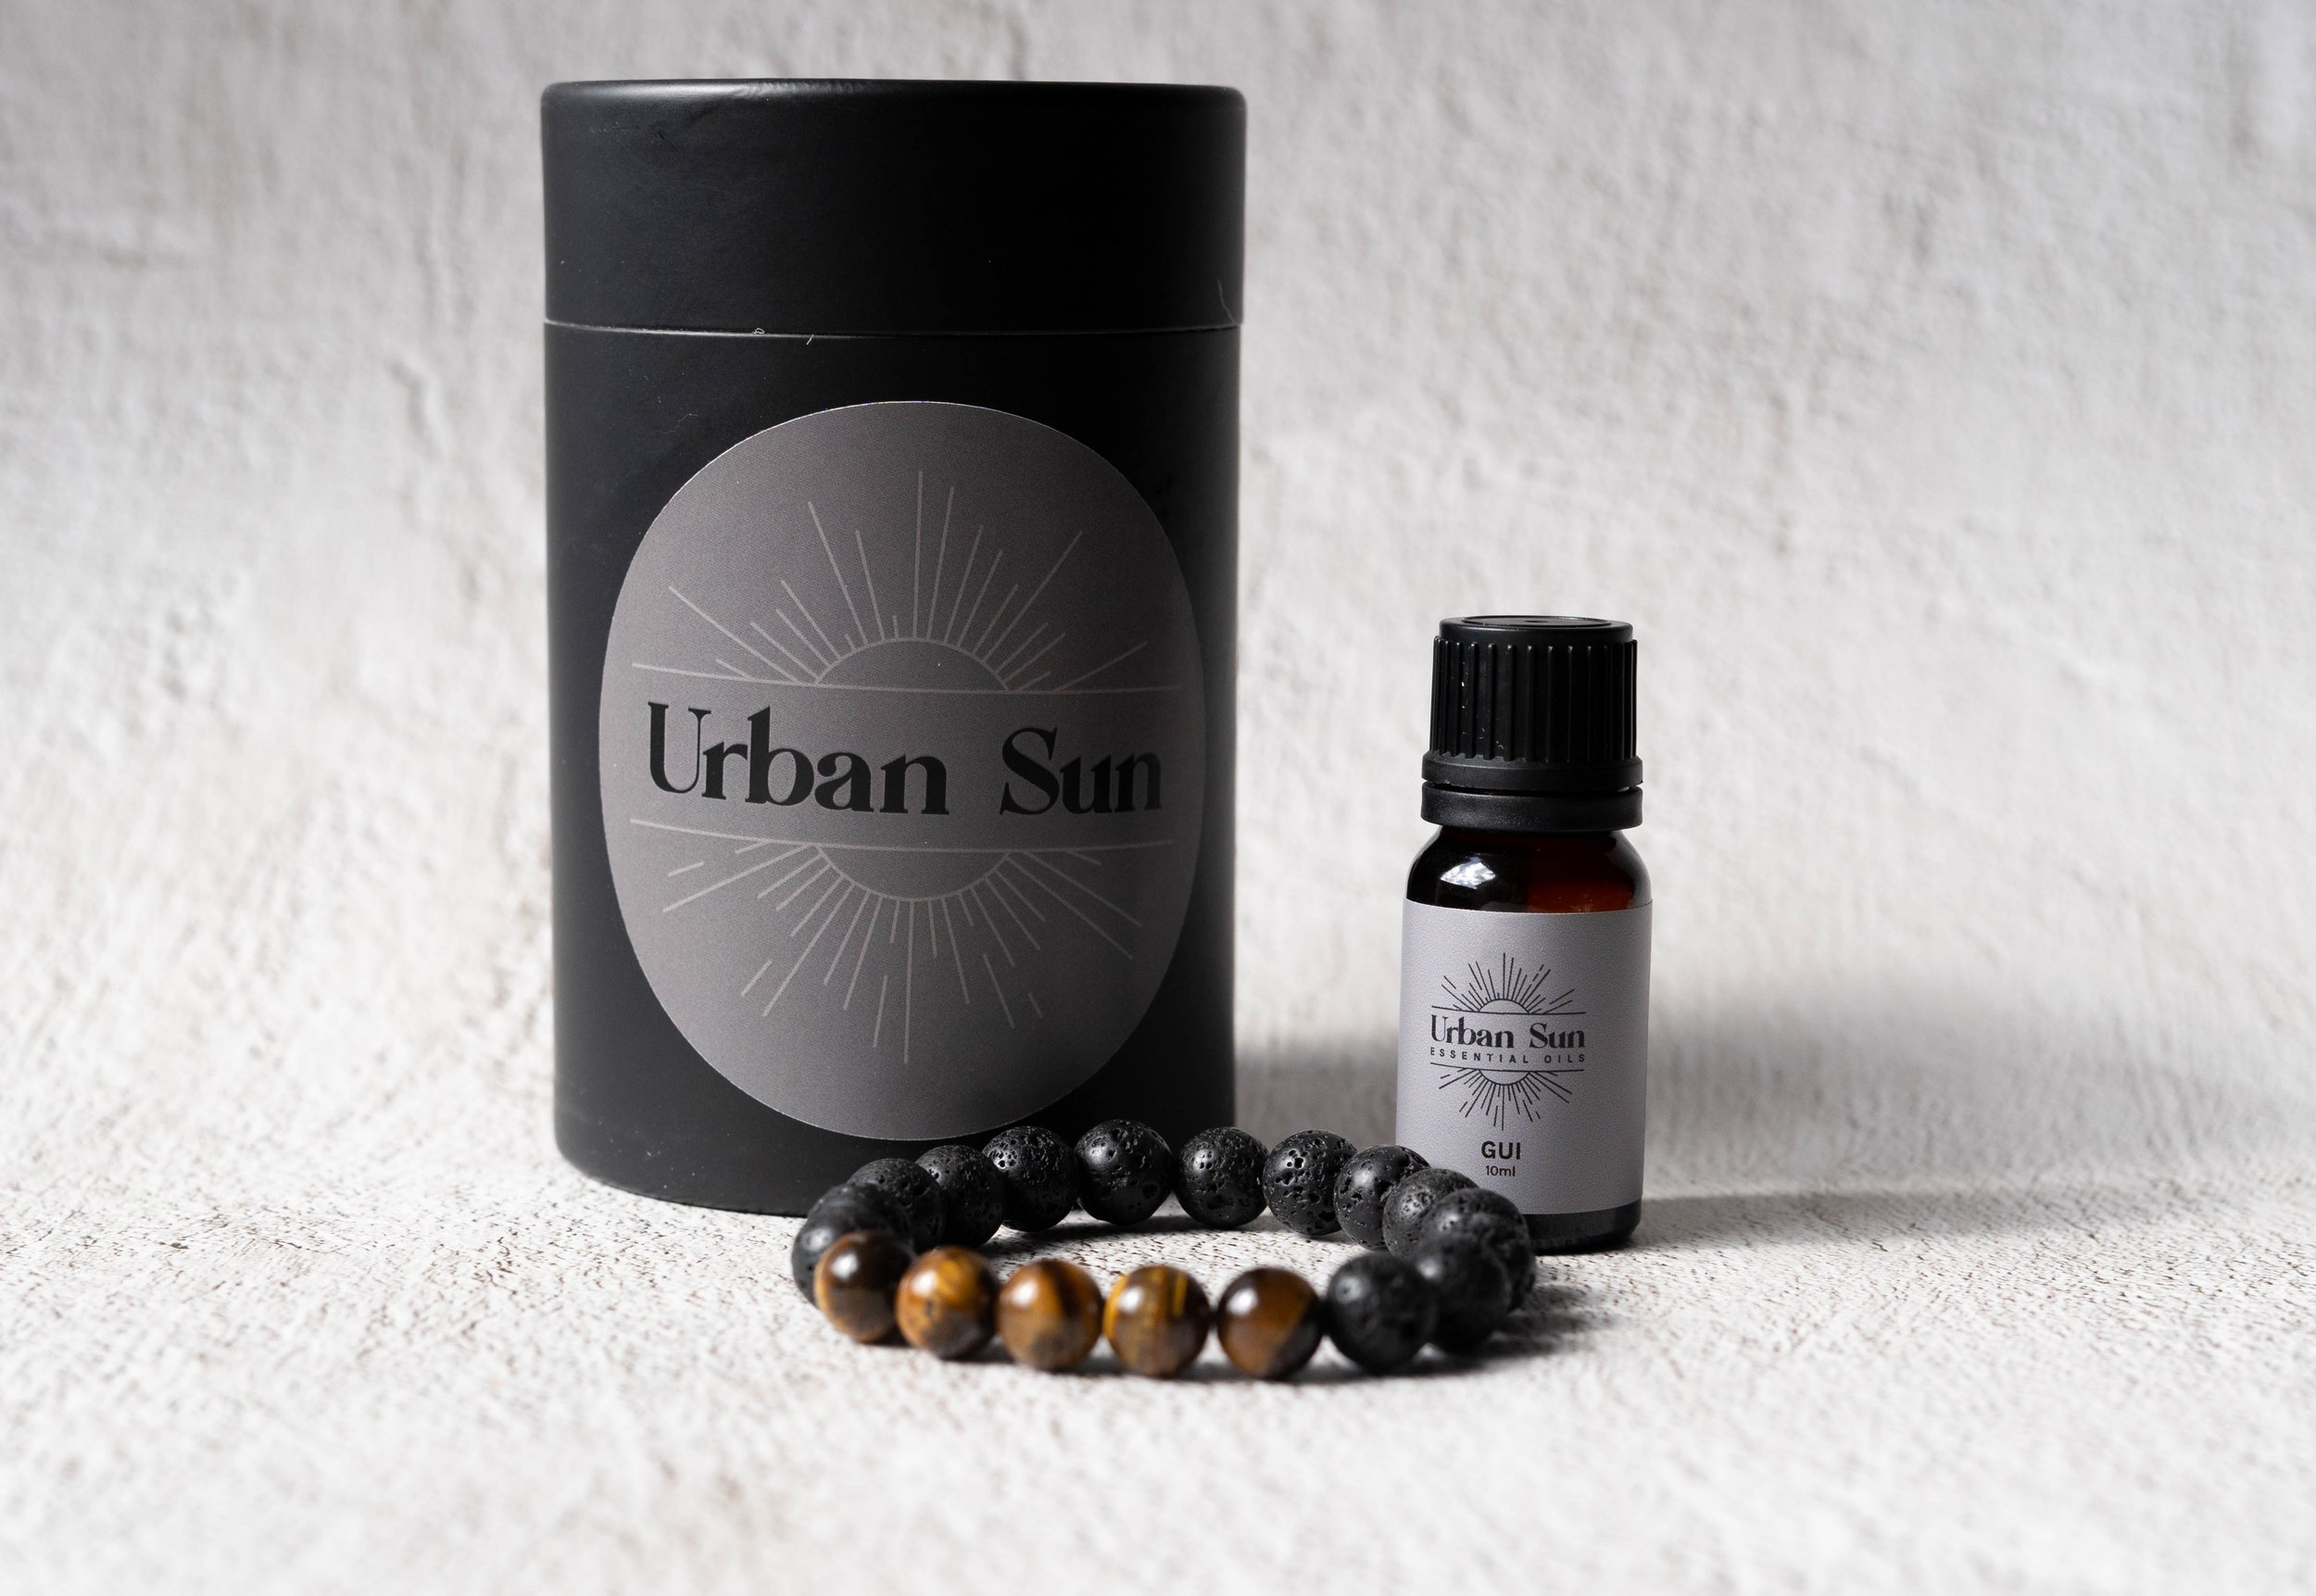 Urban Sun essential oils